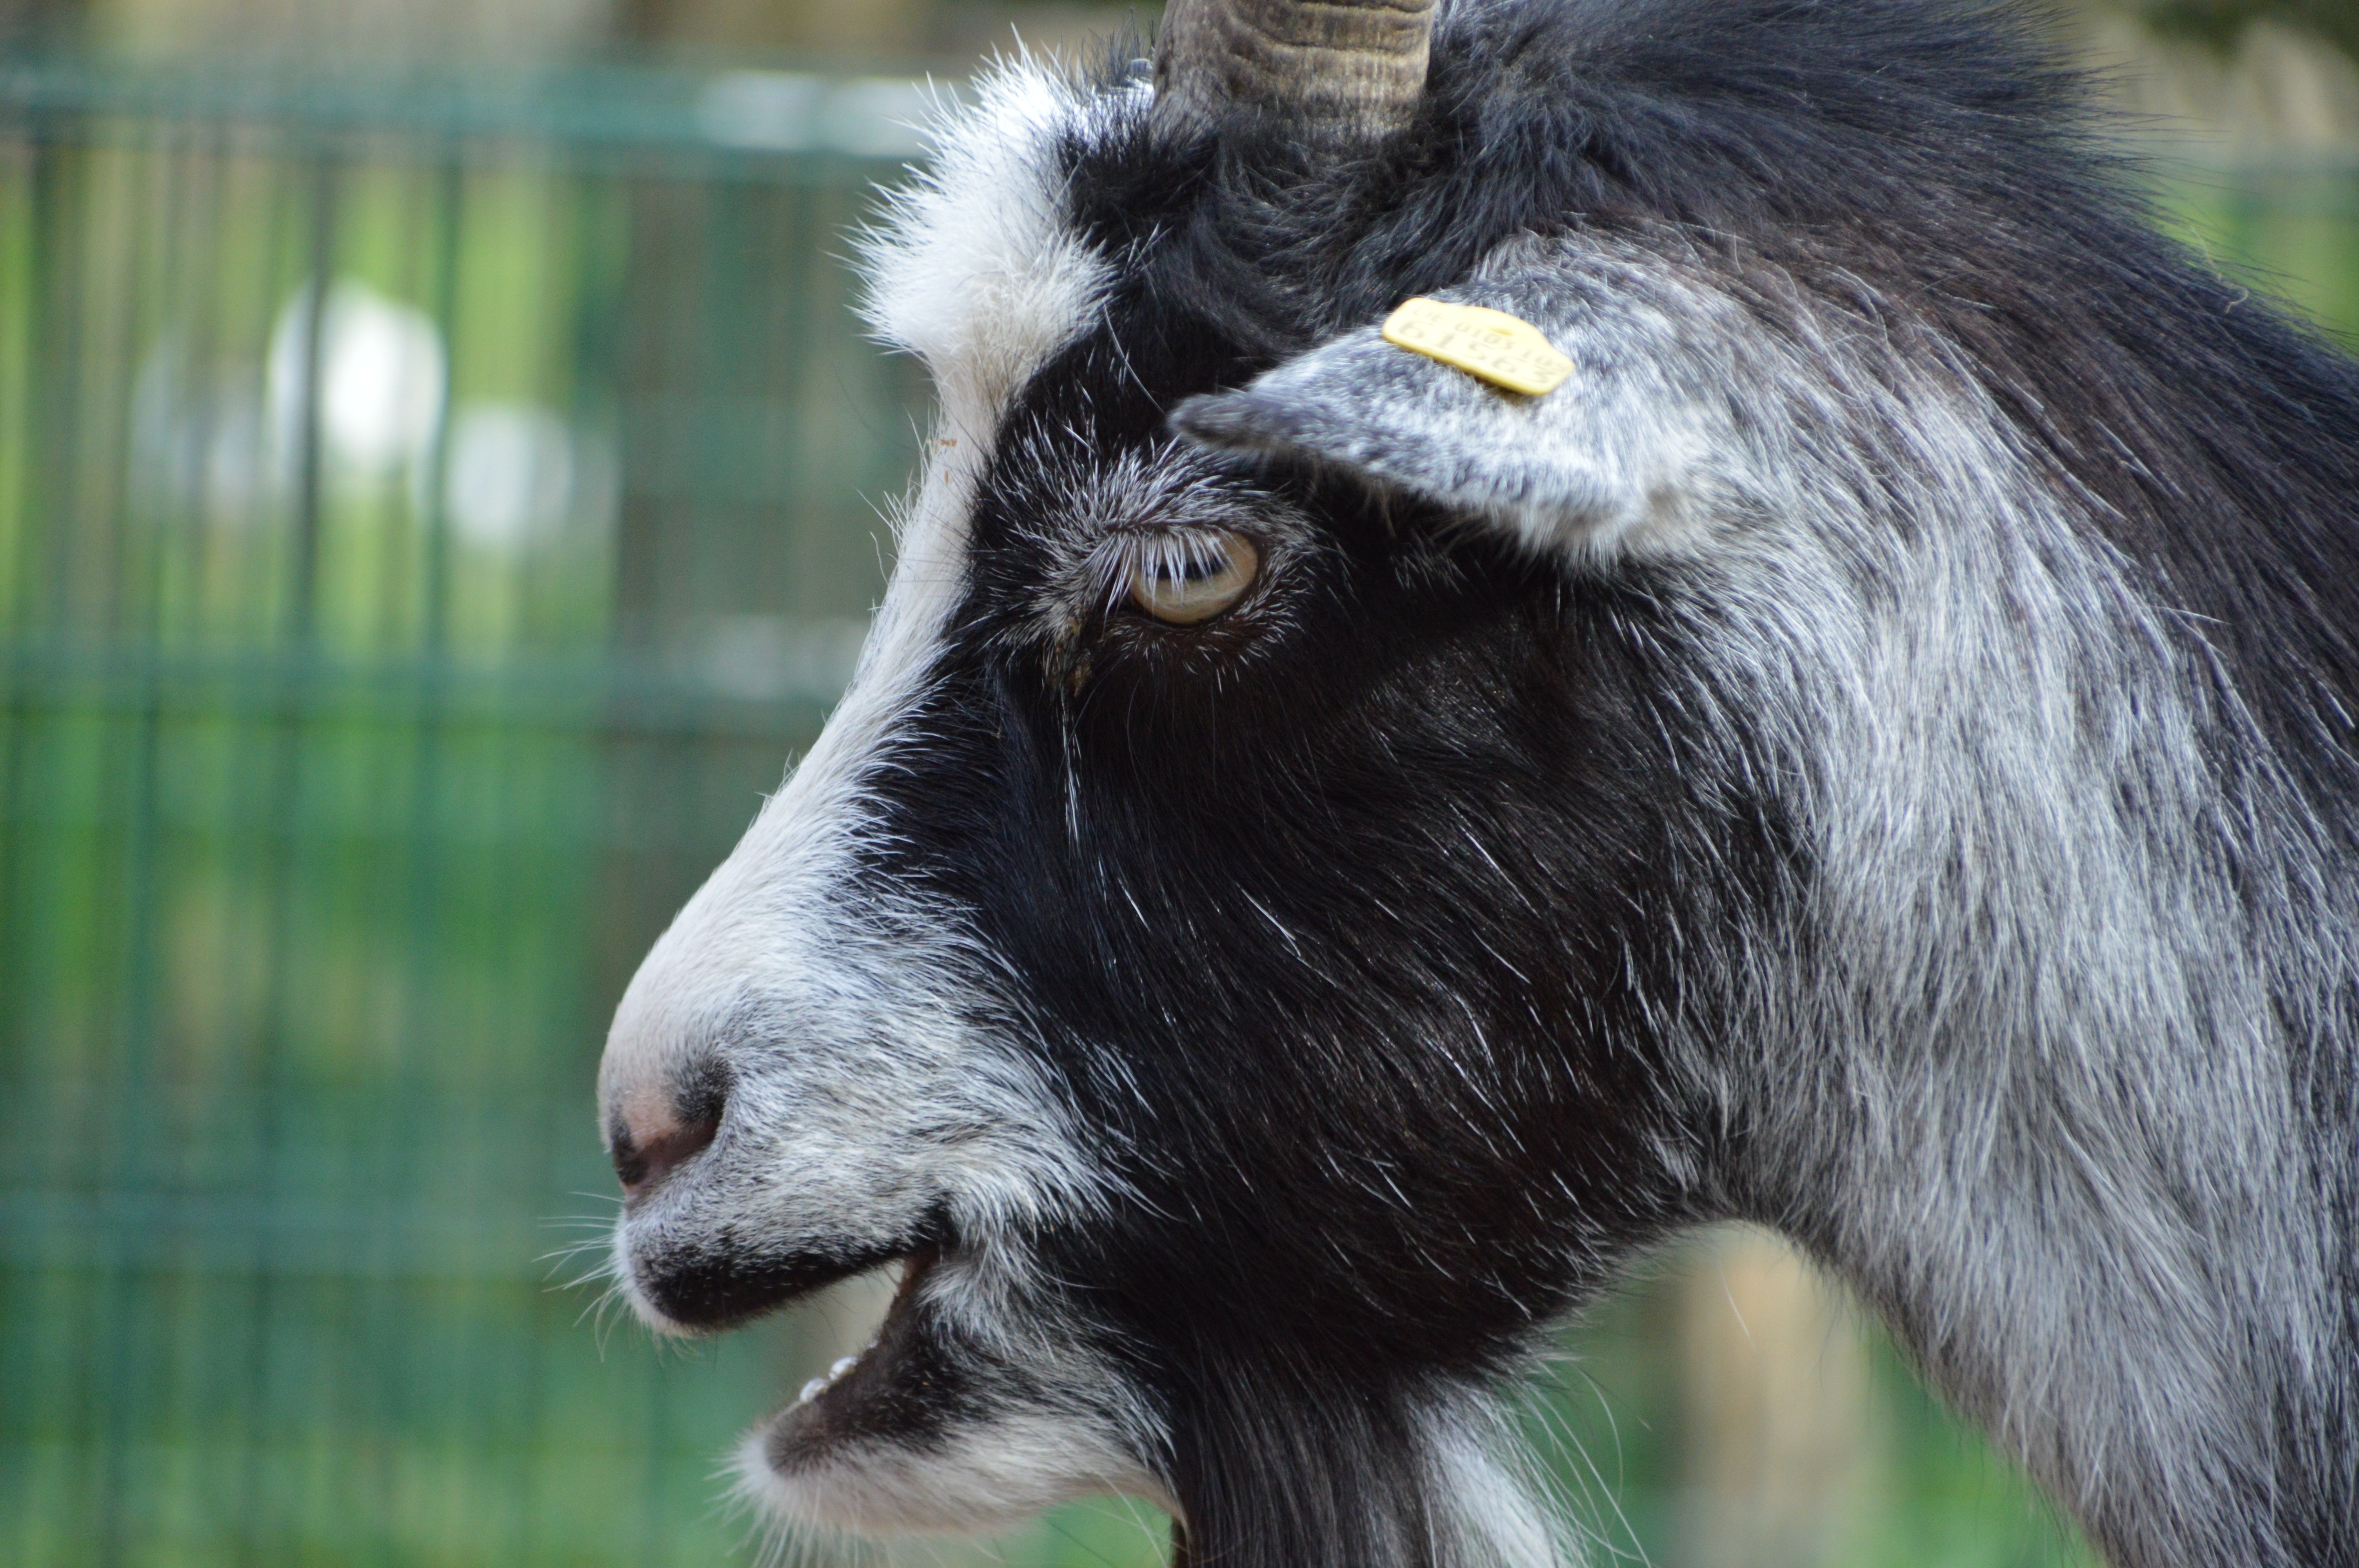 Goat, Country Life, Nature, Livestock, one animal, animal head